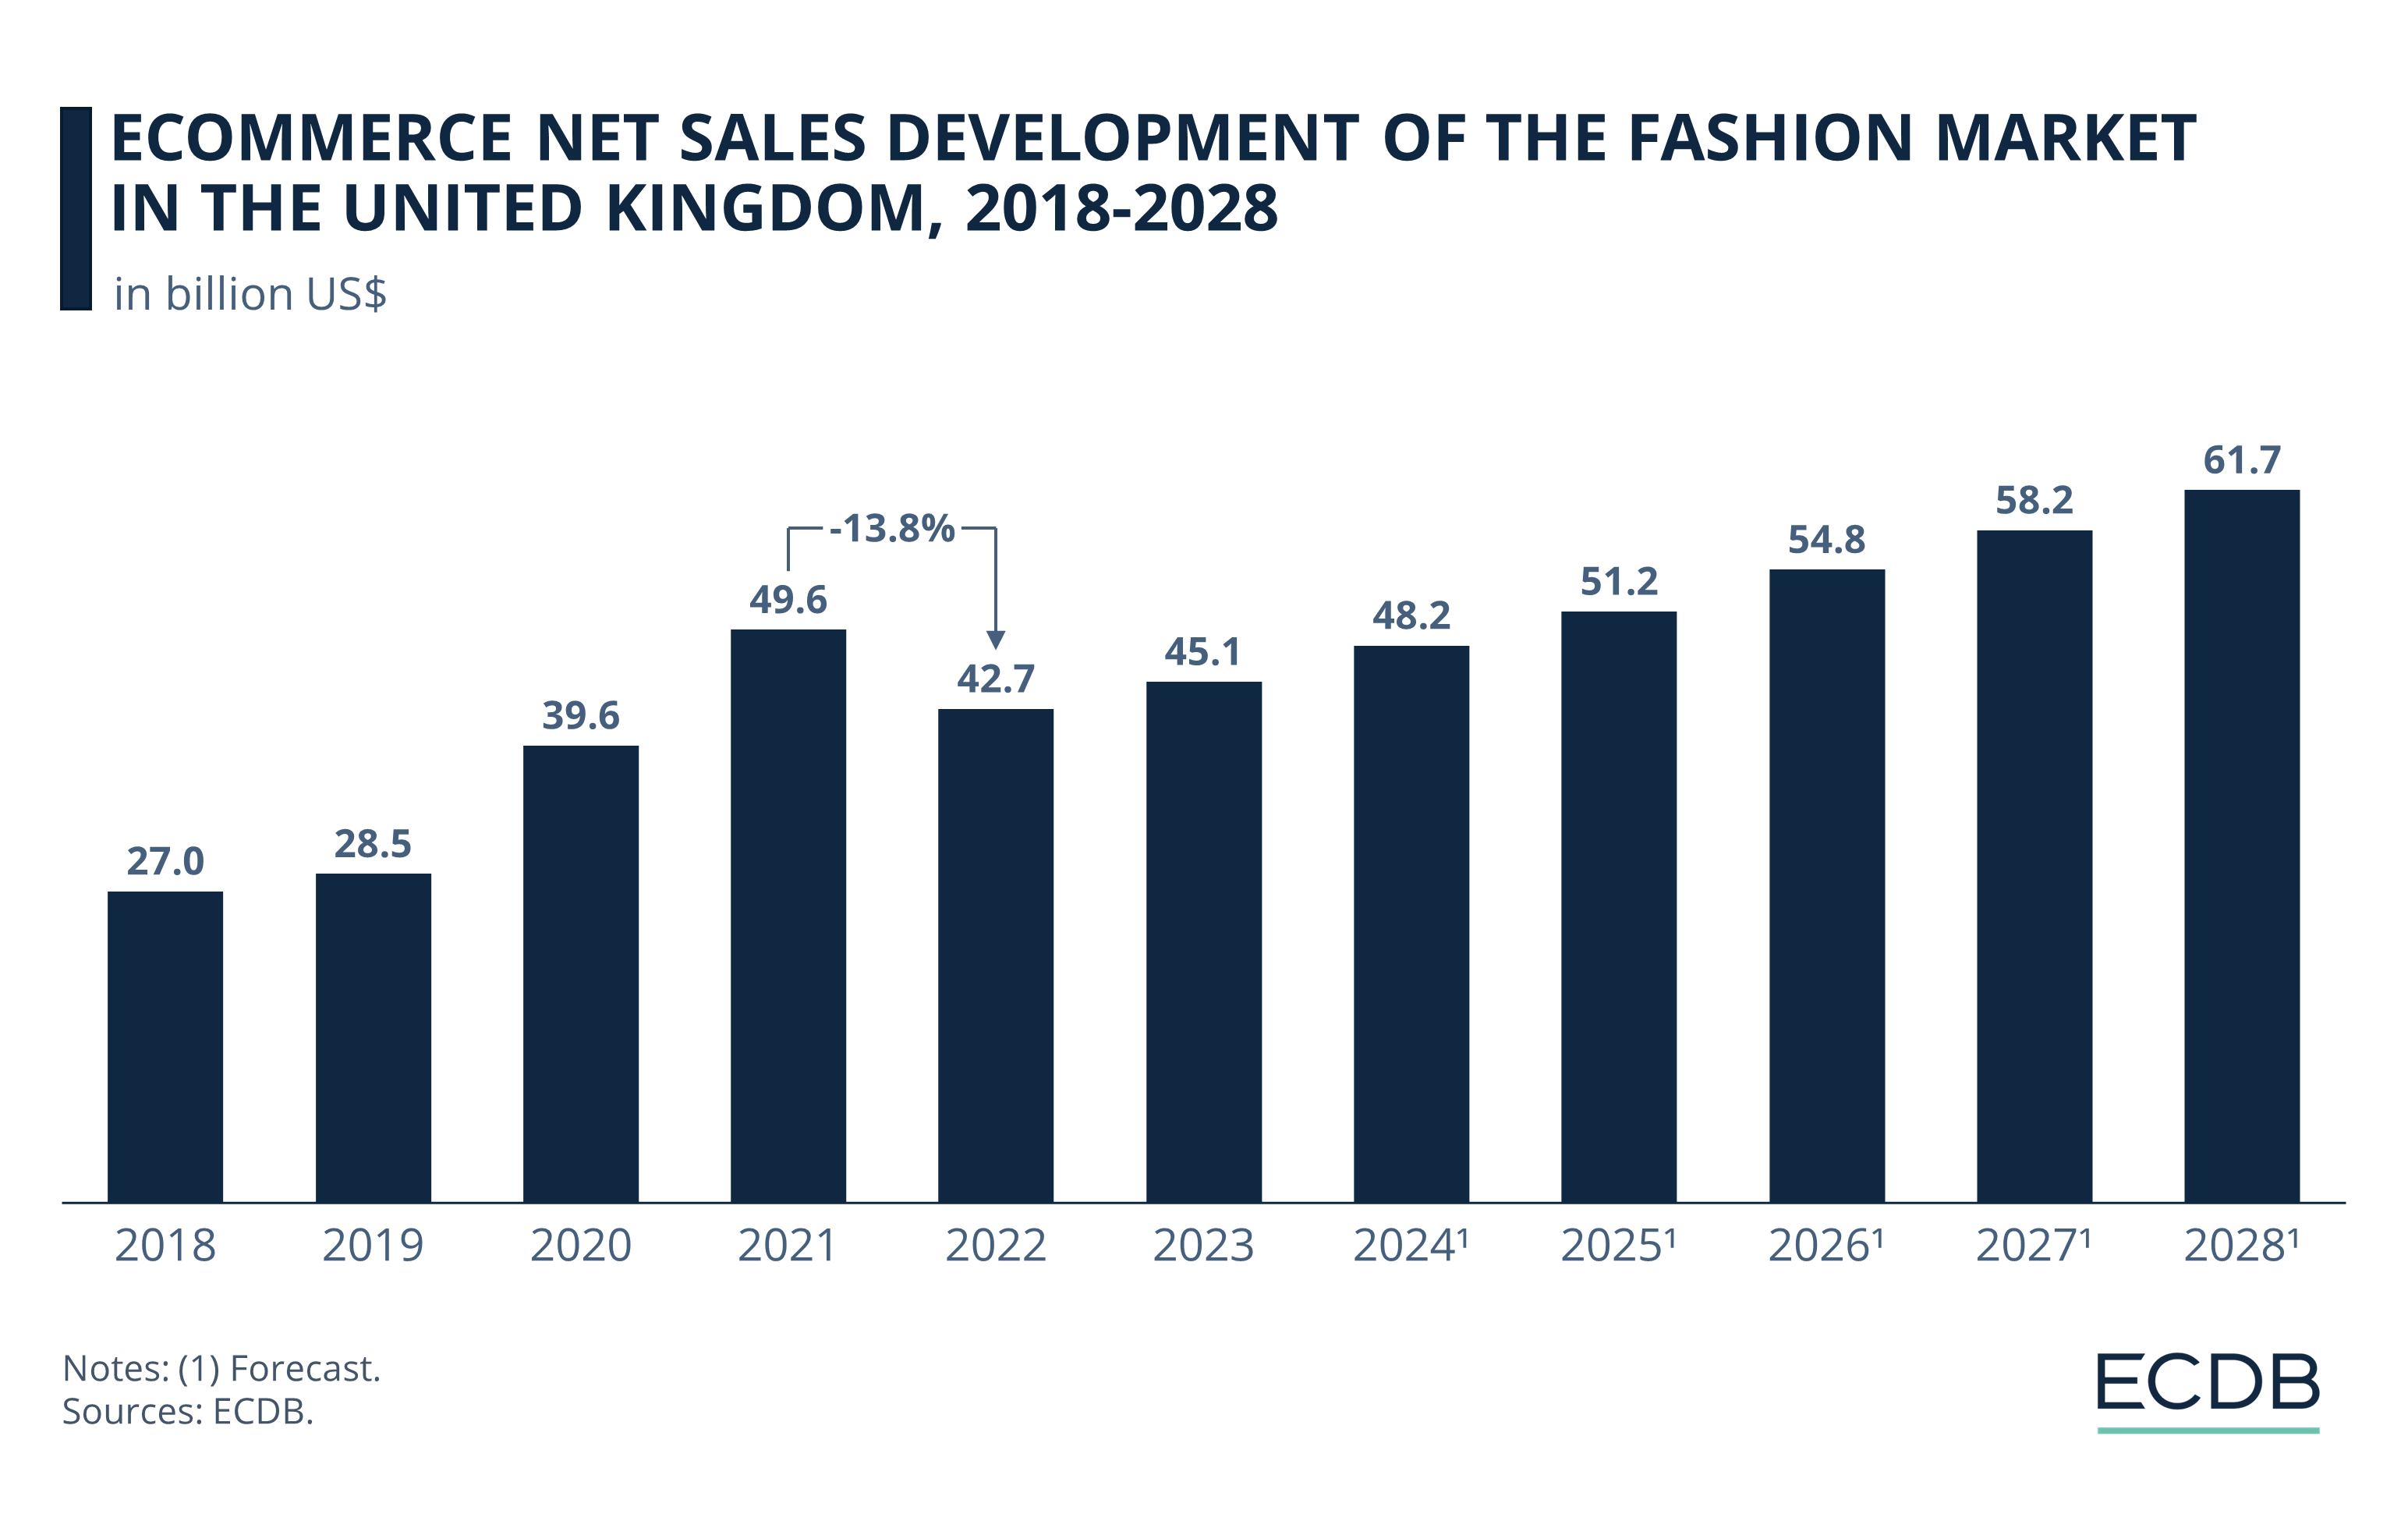 eCommerce Net Sales Development of the Fashion Market in the United Kingdom, 2018-2028